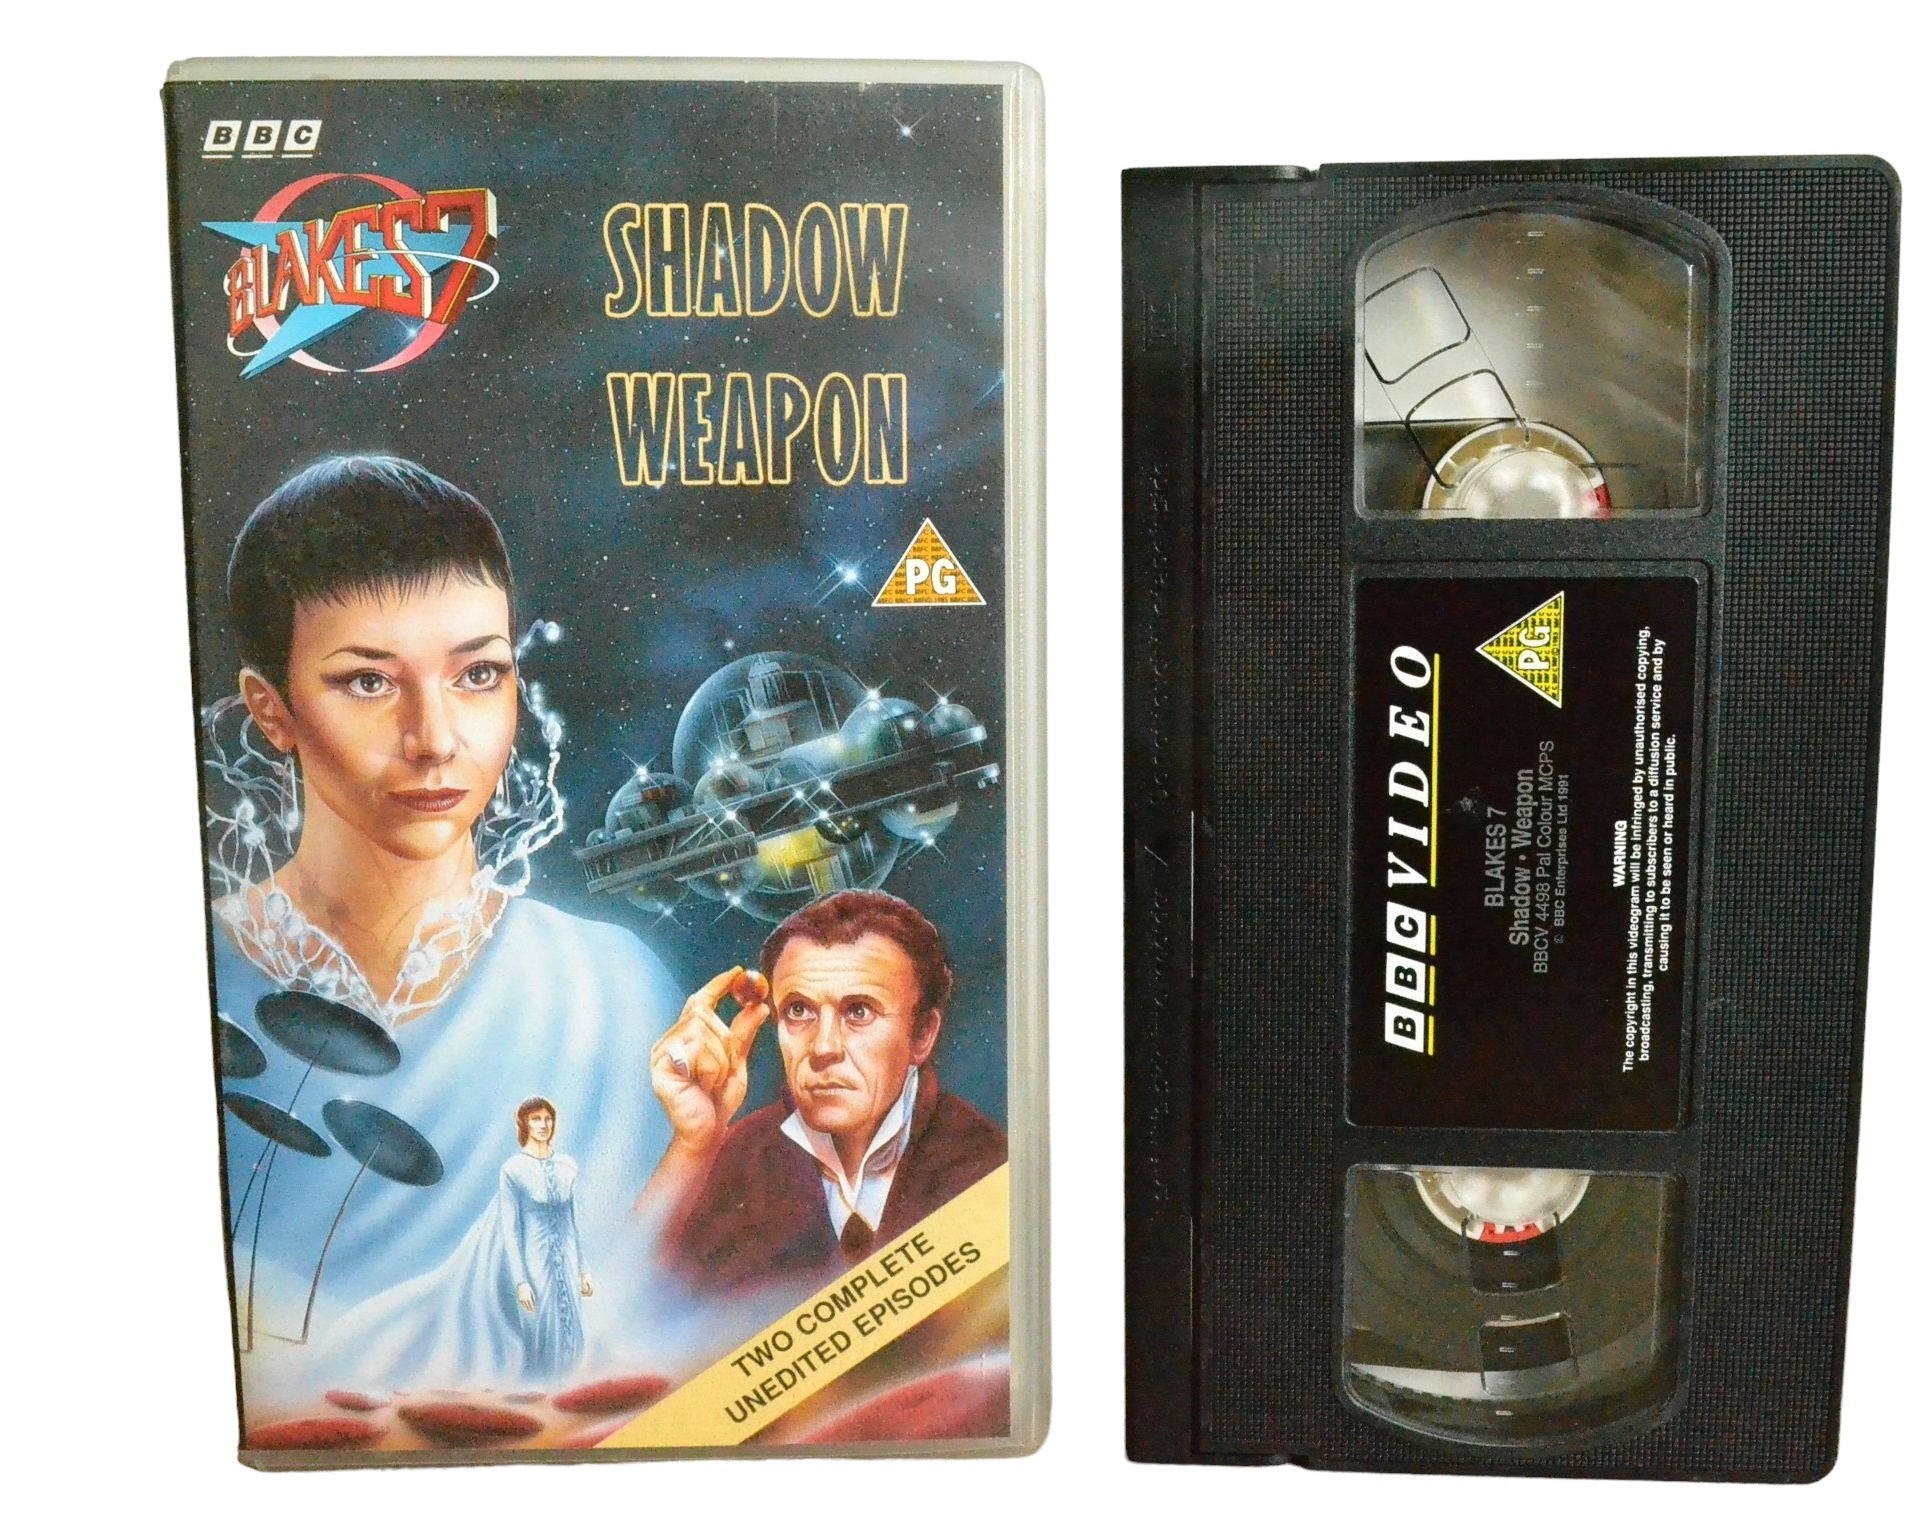 Blake's 7 : Shadow / Weapon - Gareth Thomas - BBC Video - BBCV4498 - Sci-Fi - Pal - VHS-